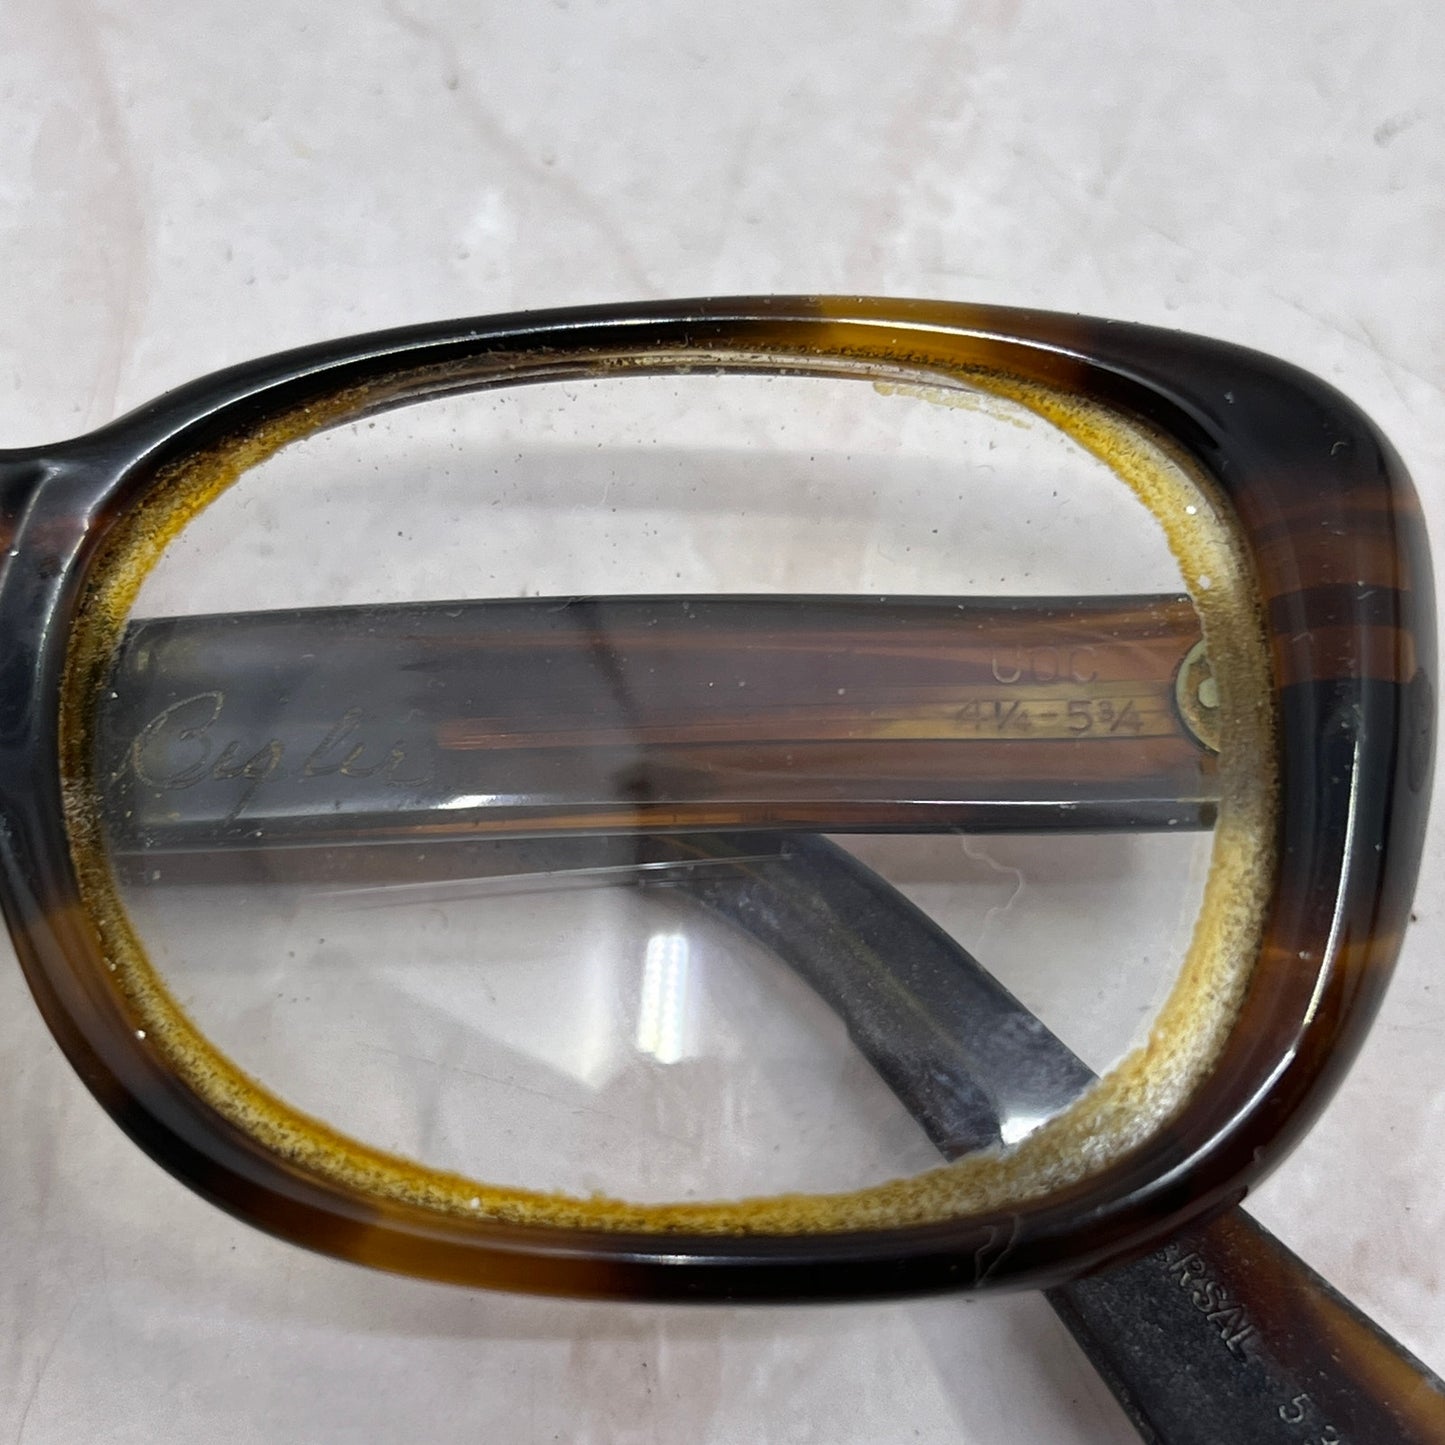 Retro Tortoise Shell Acrylic Sunglasses Eyeglasses Frames TG7-G4-5